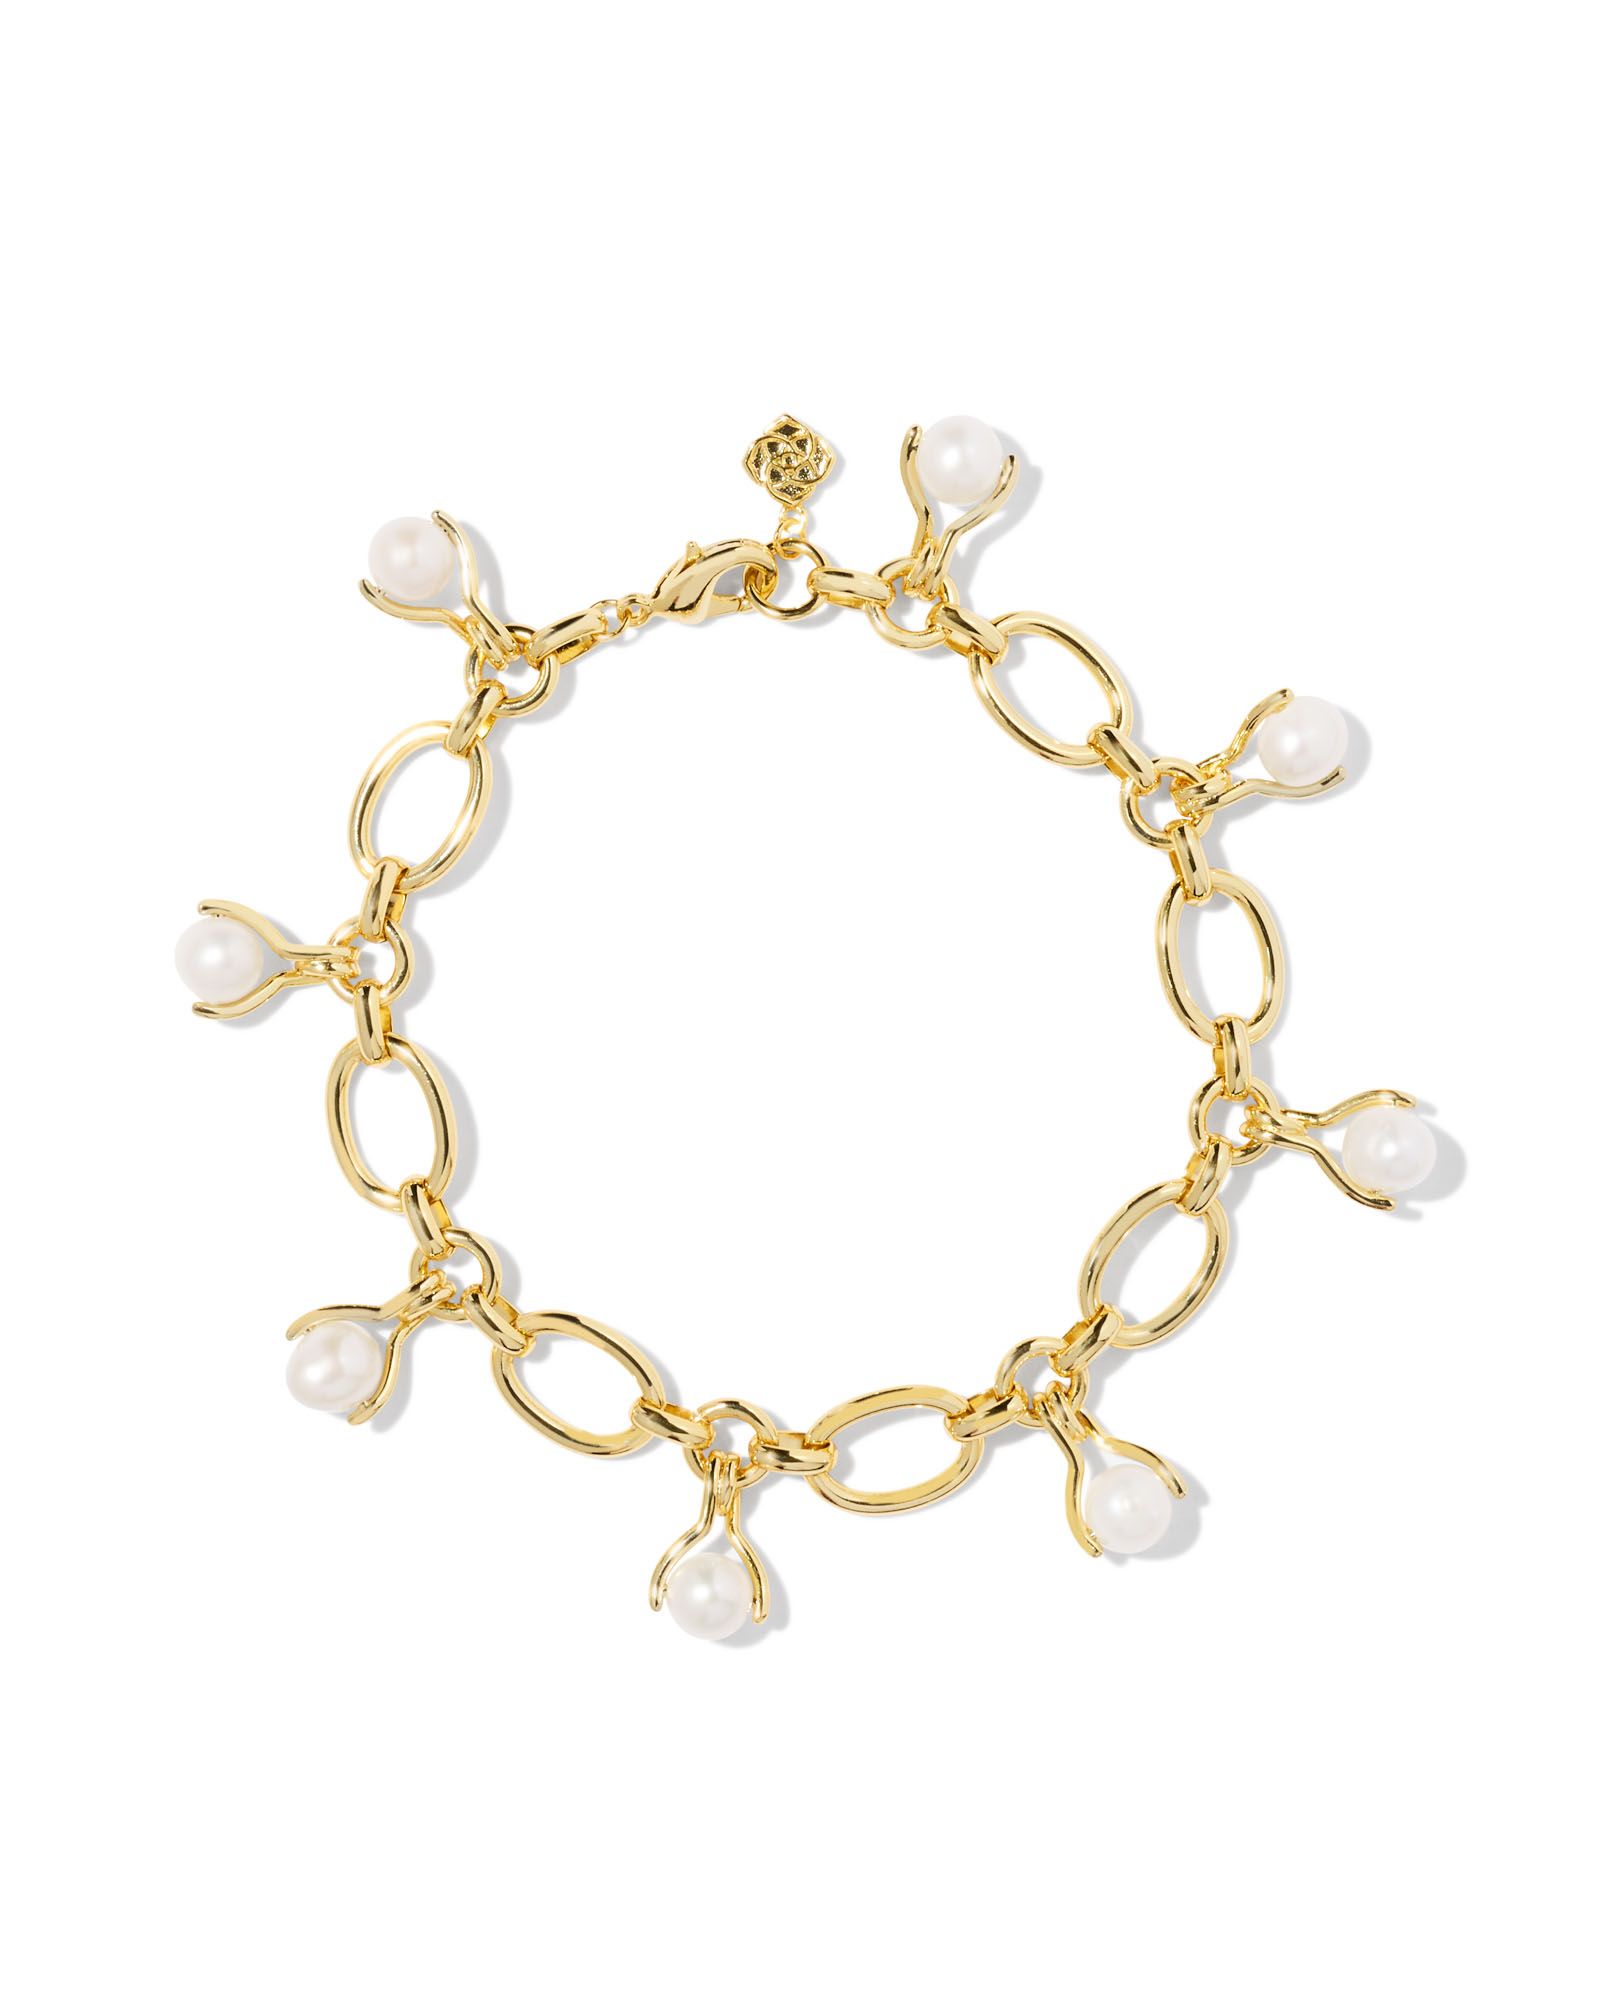 Ashton Gold Pearl Chain Bracelet in White Pearl | Kendra Scott